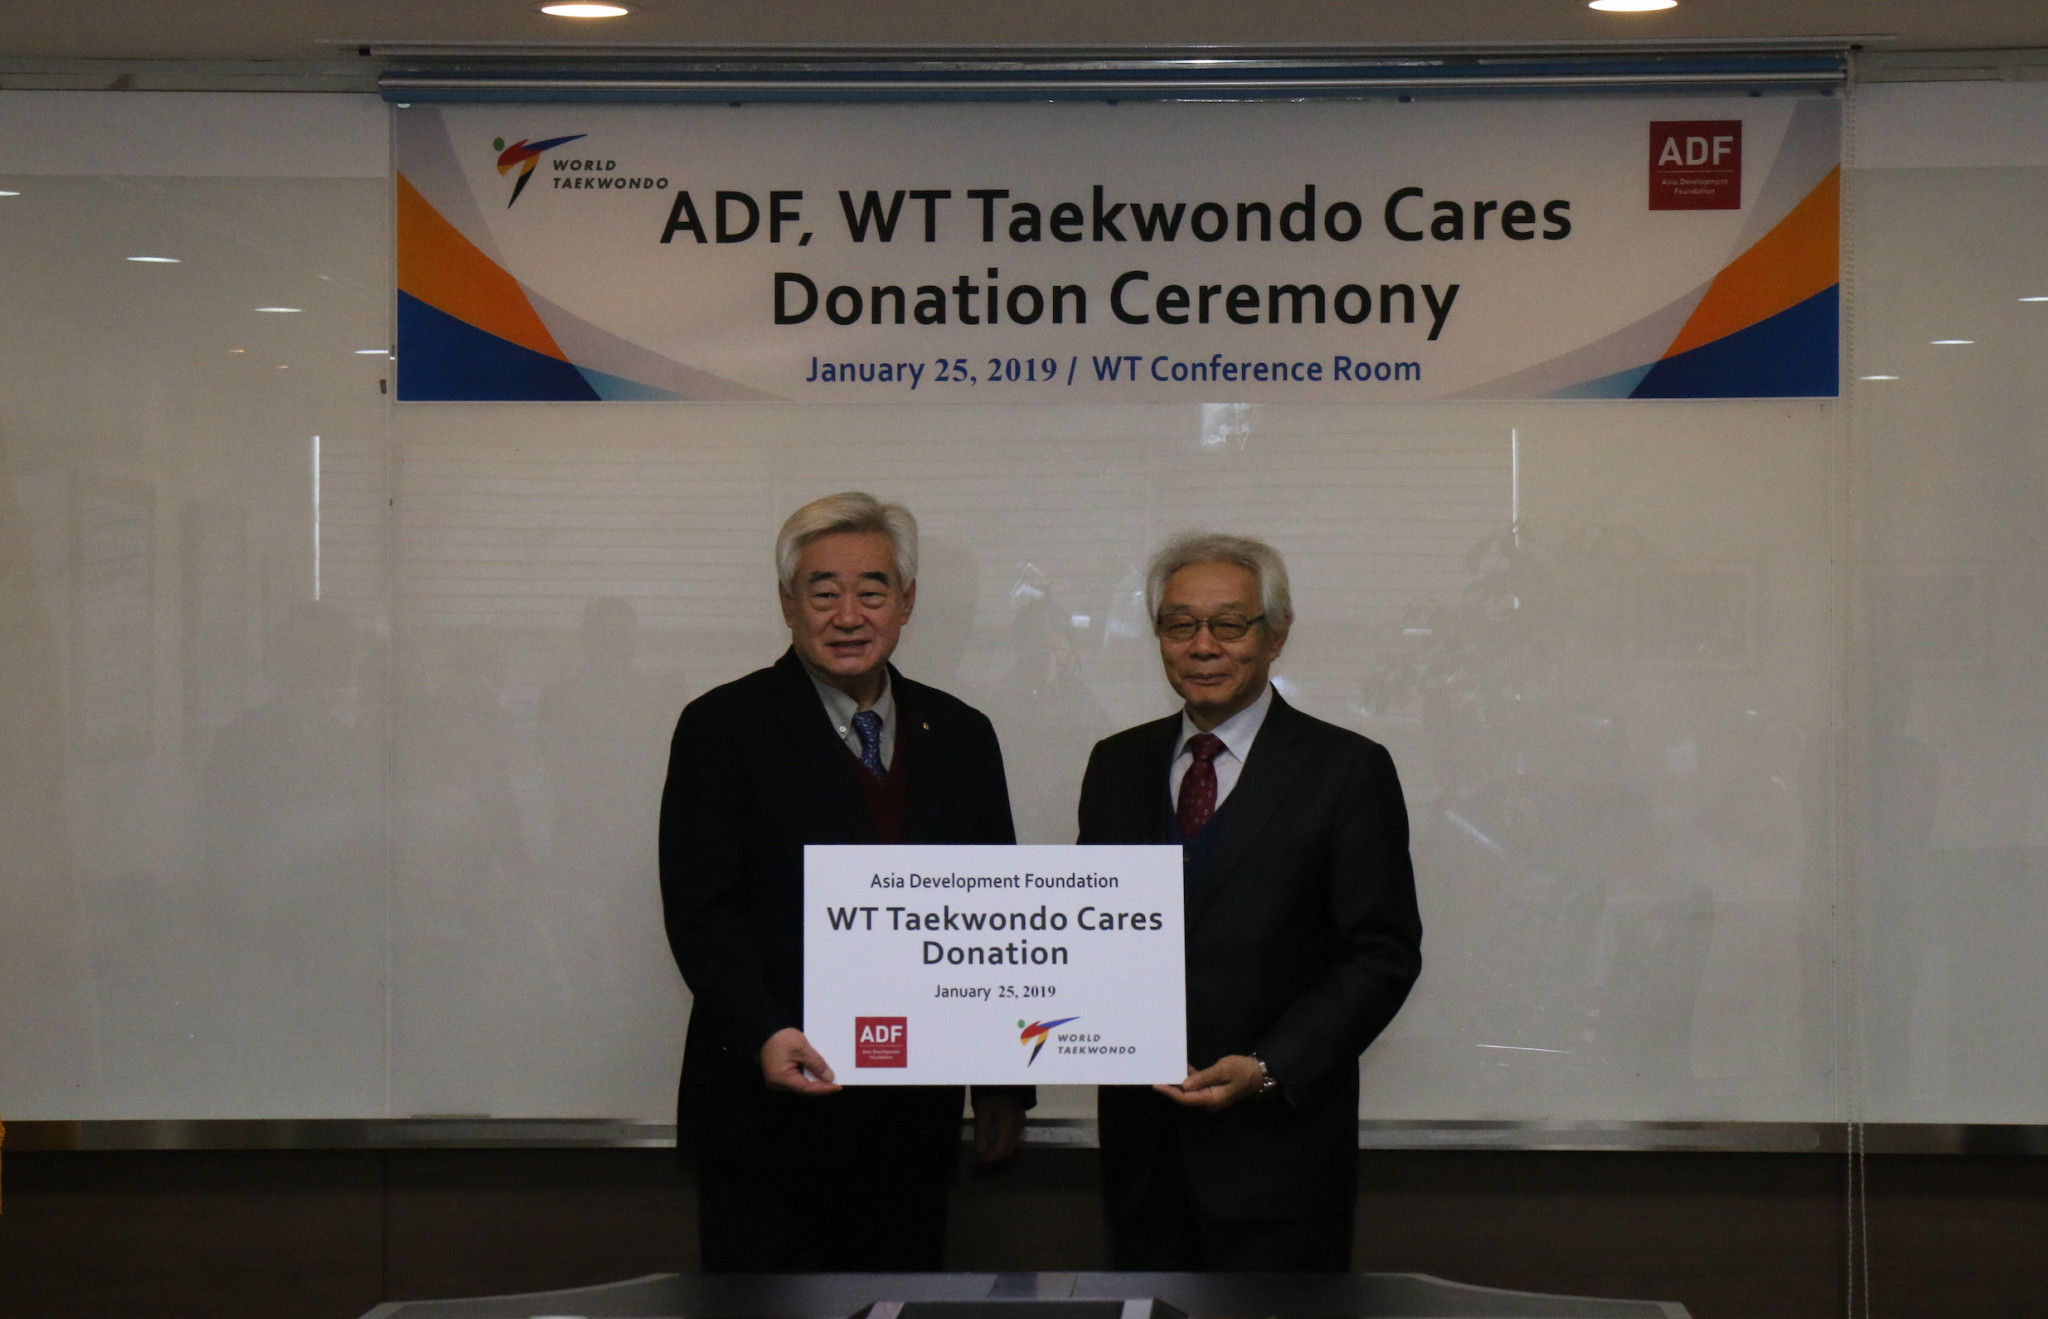 World Taekwondo receive $90,000 donation from Asia Development Foundation